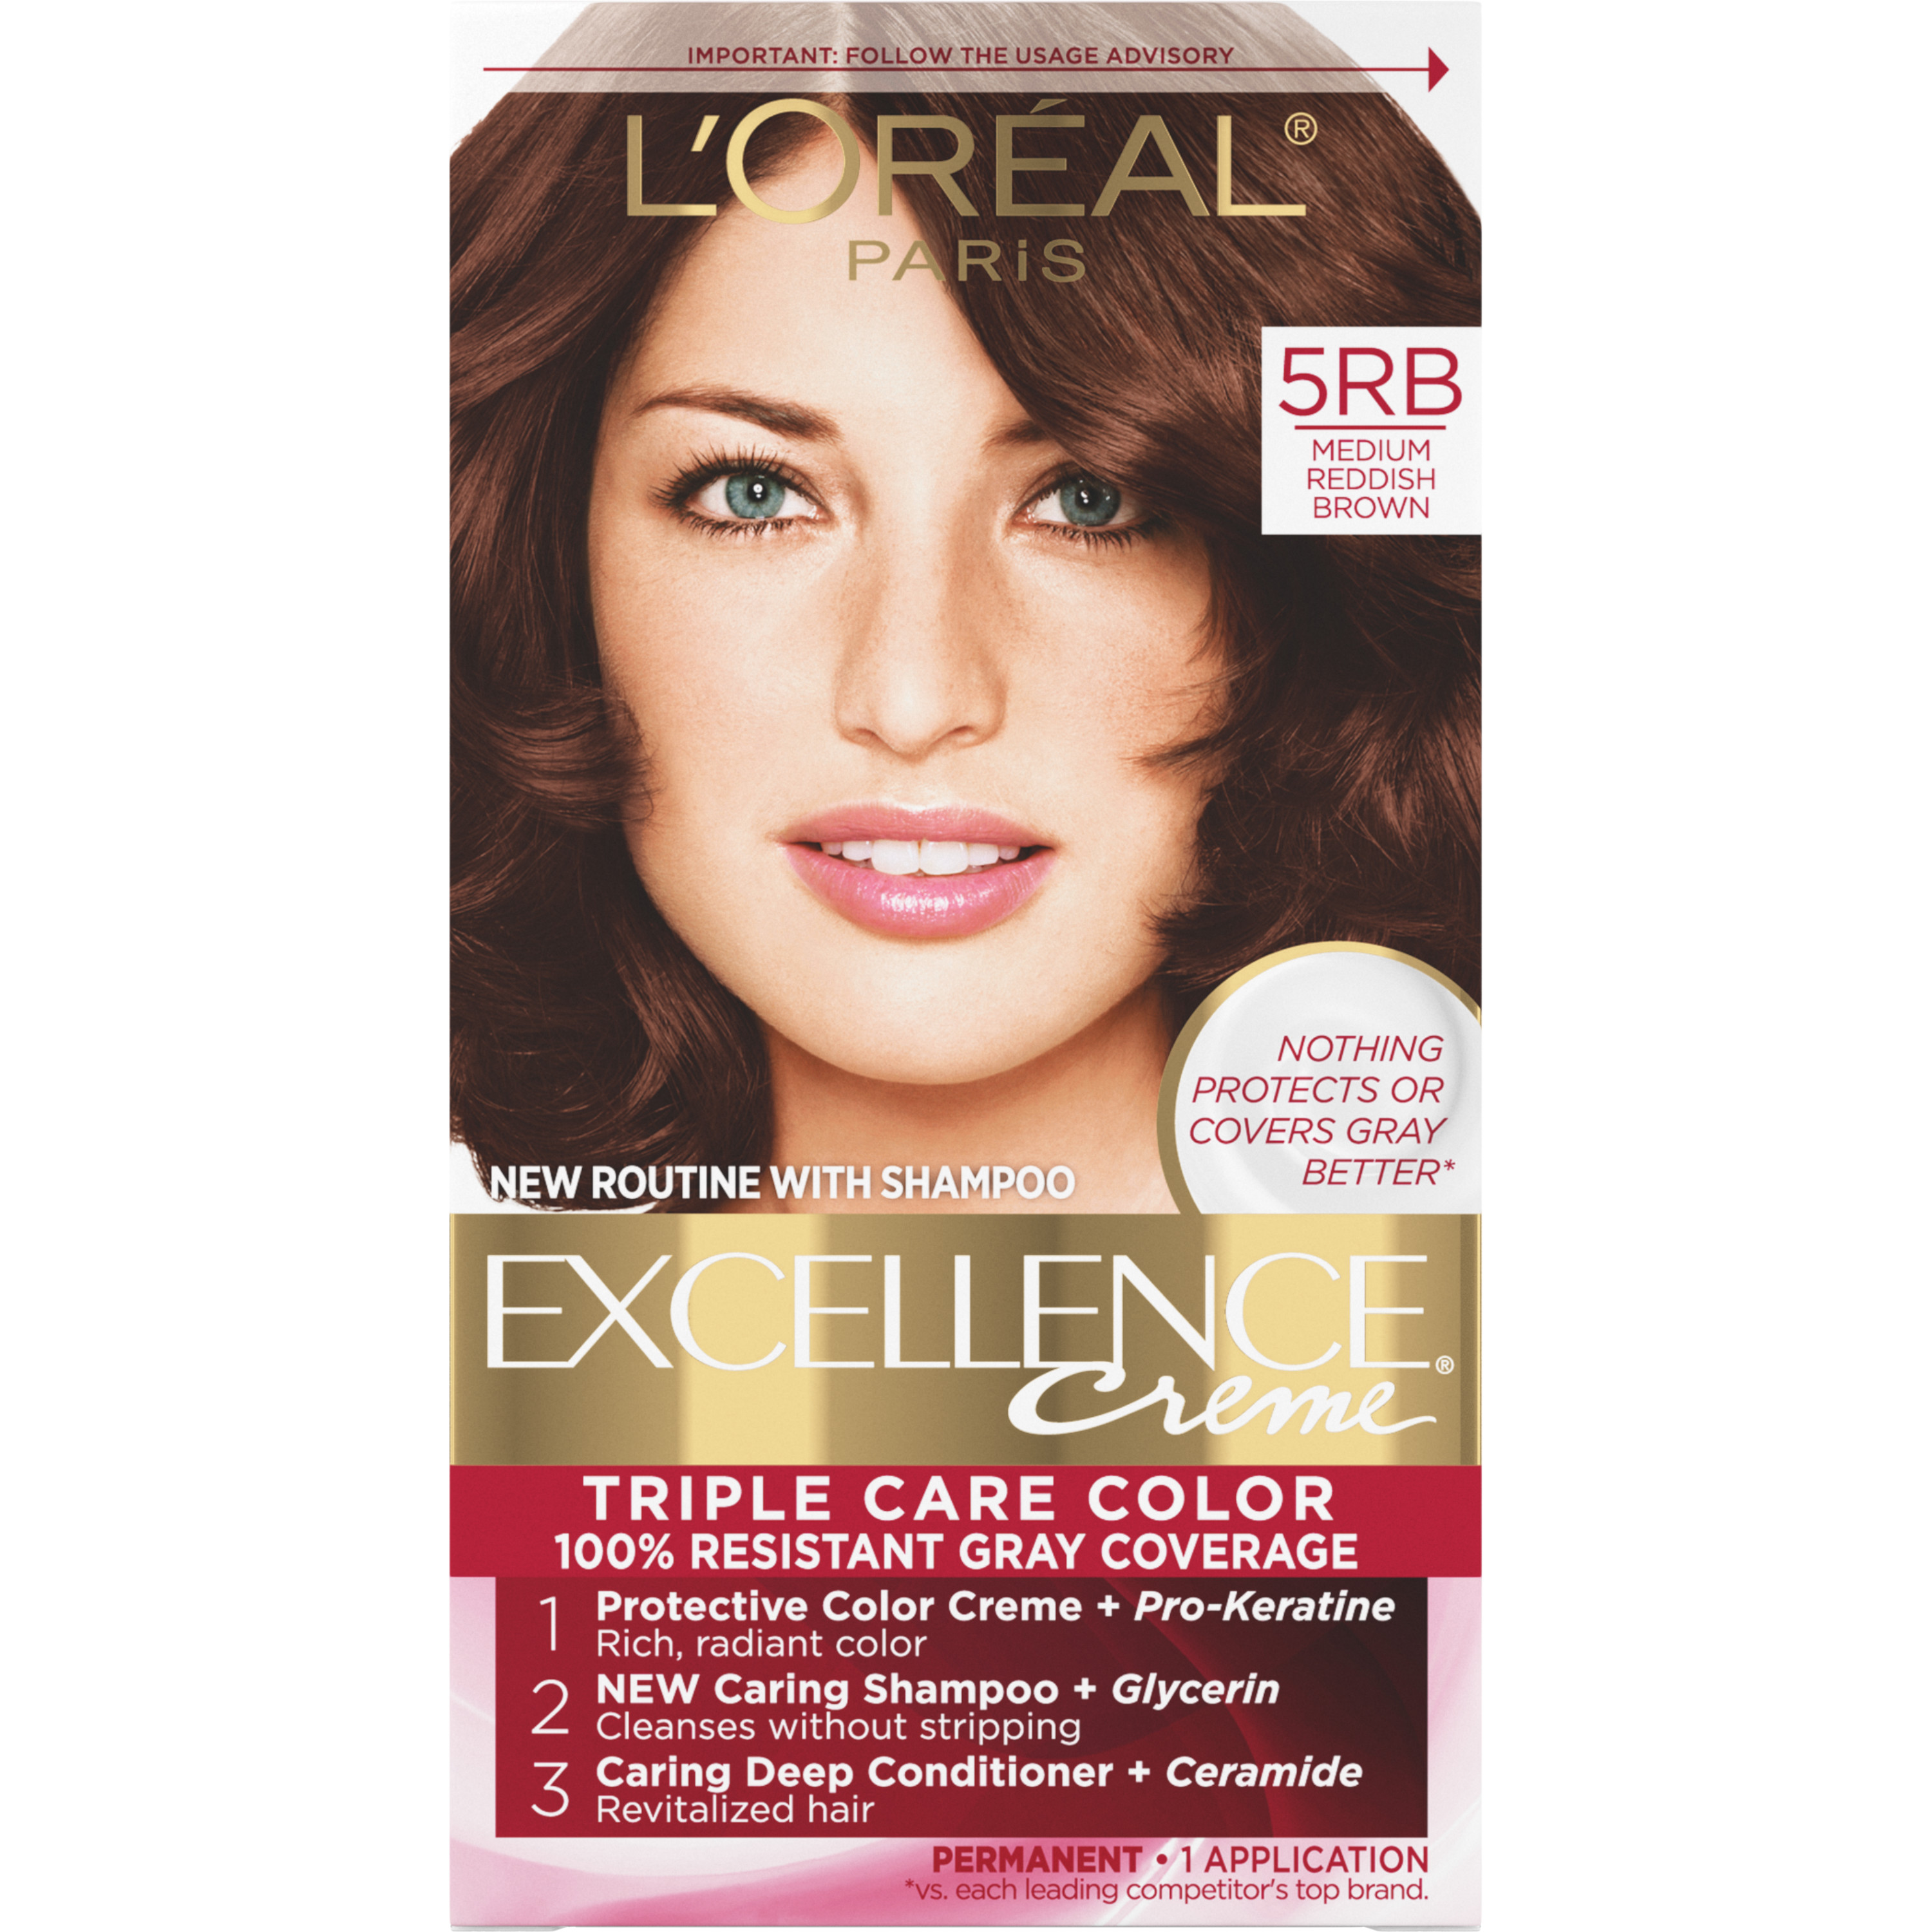 L'Oreal Paris Excellence Creme Permanent Hair Color, 5RB Medium Reddish Brown - image 1 of 9